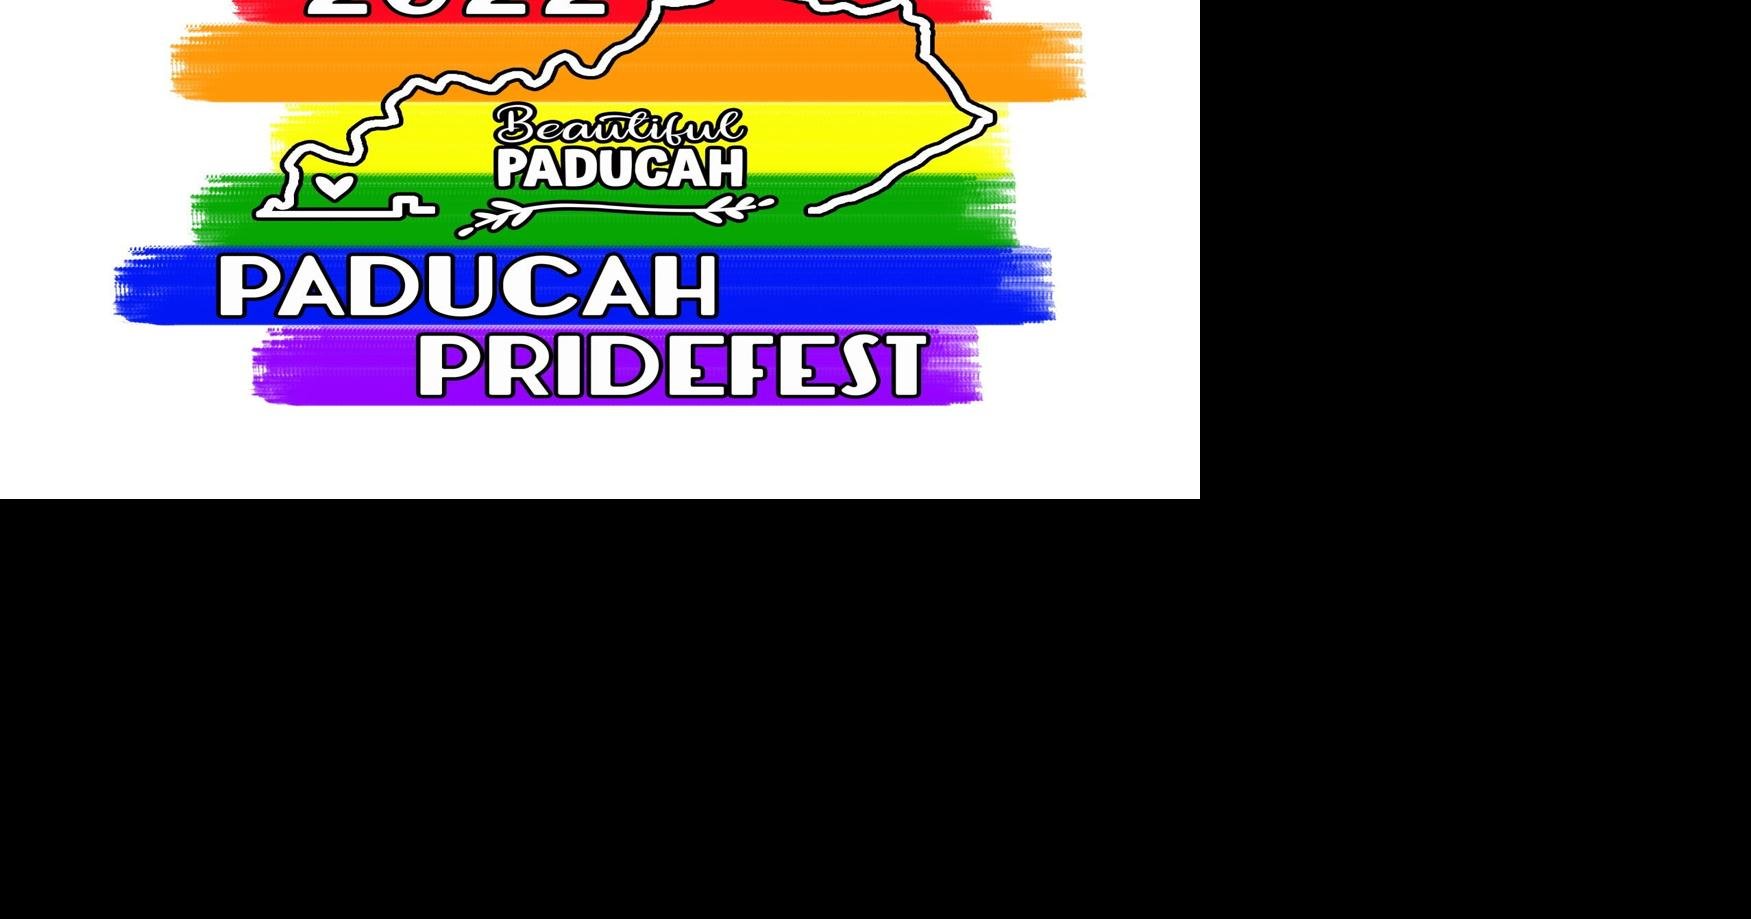 Paducah Pridefest to celebrate diversity, inclusion News